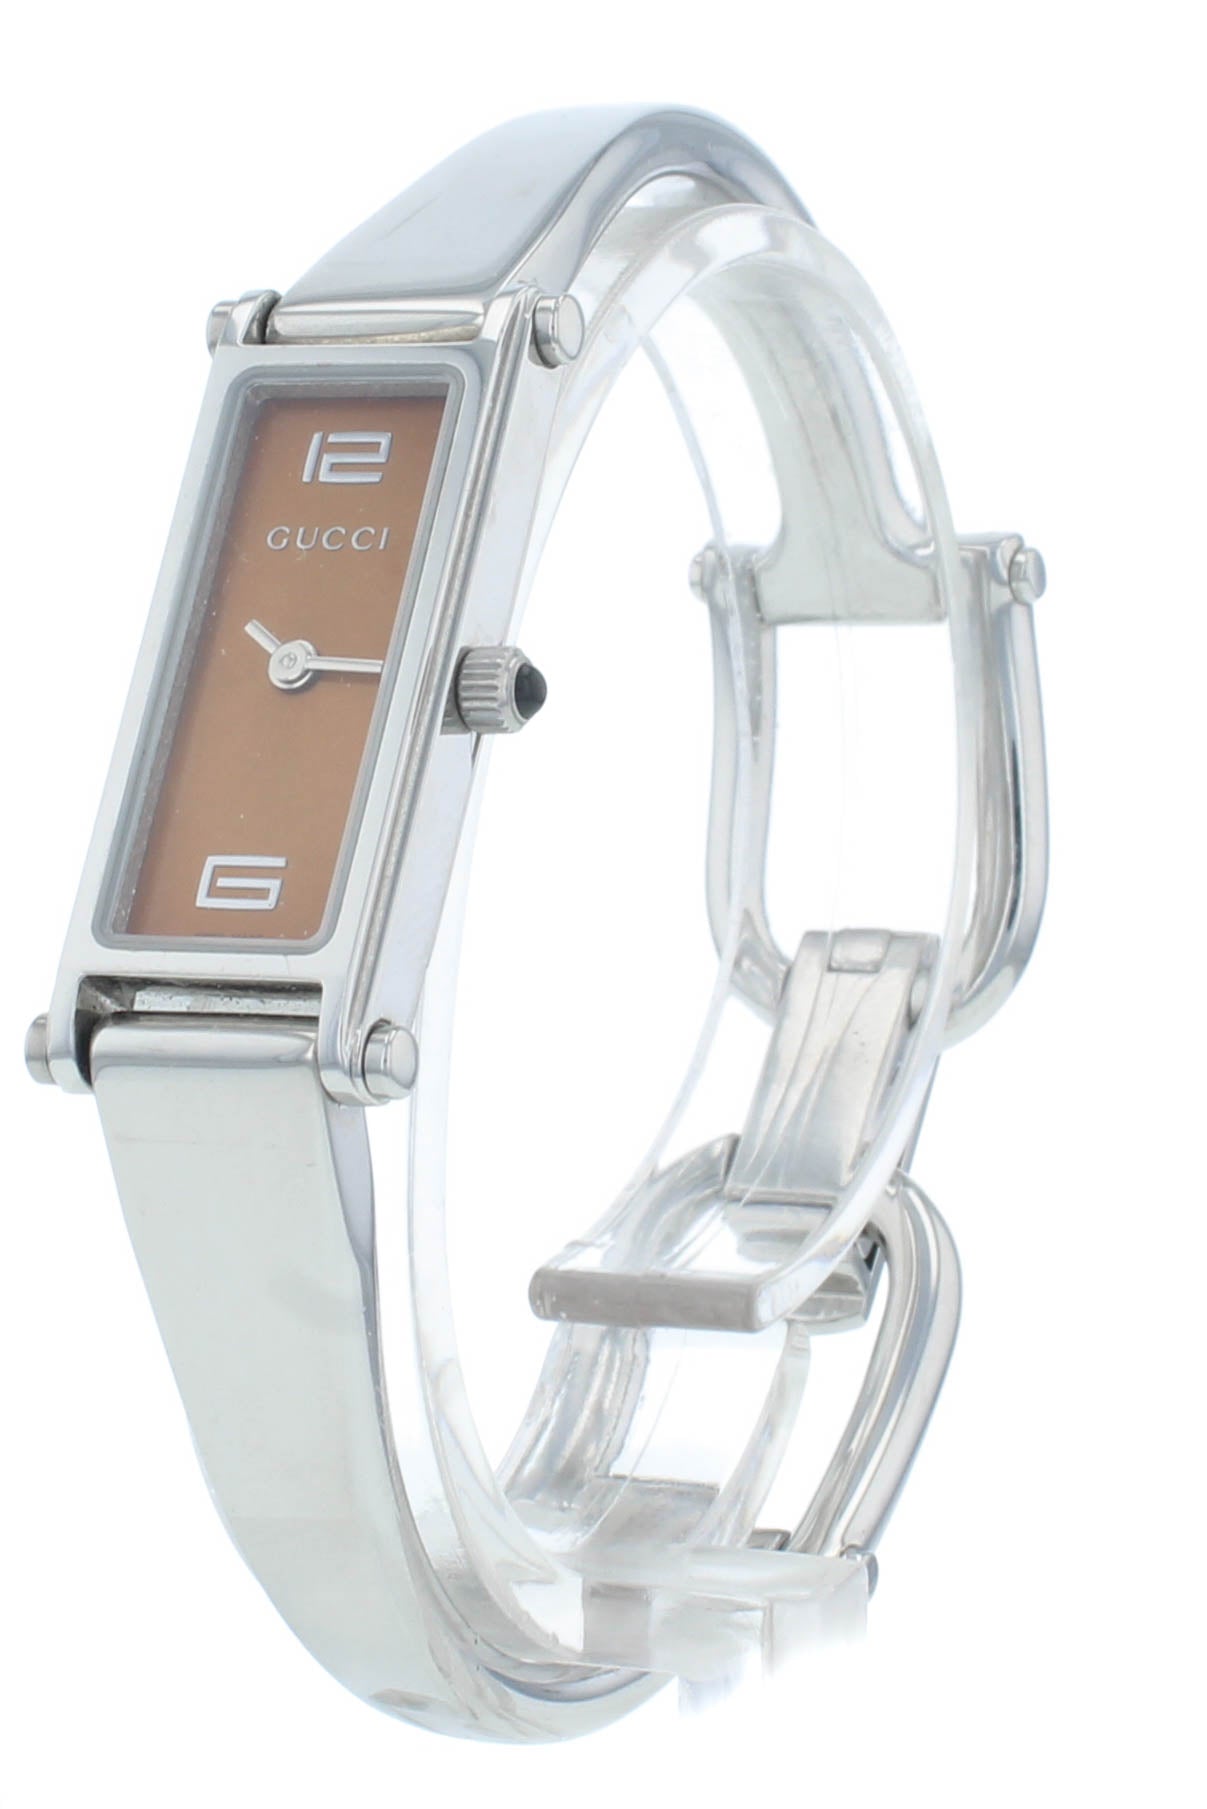 Pre-Owned Gucci Horsebit Quartz Stainless Steel 12mm Ladies Watch 1500L